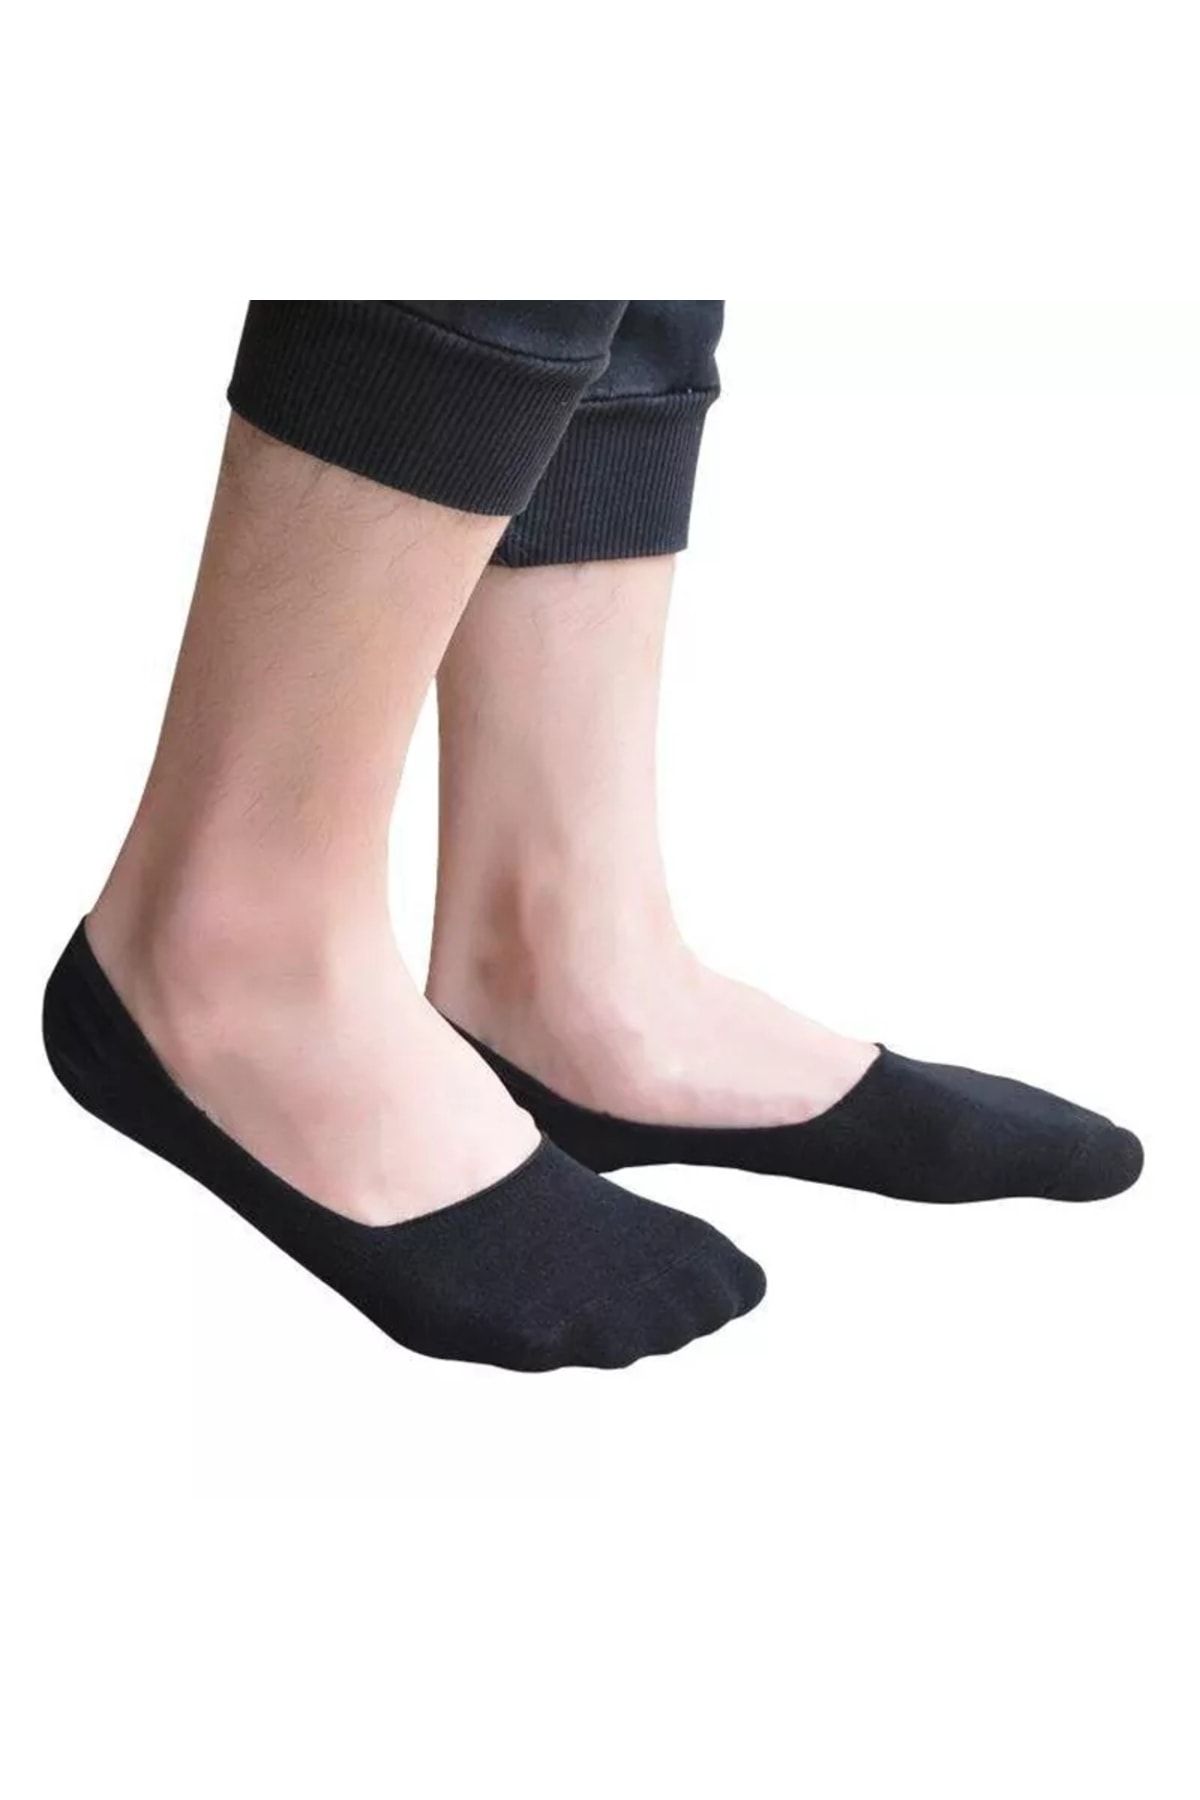 WORTHY SOCKS Pack of 12 Invisible Silicone Men's Ballerina Socks